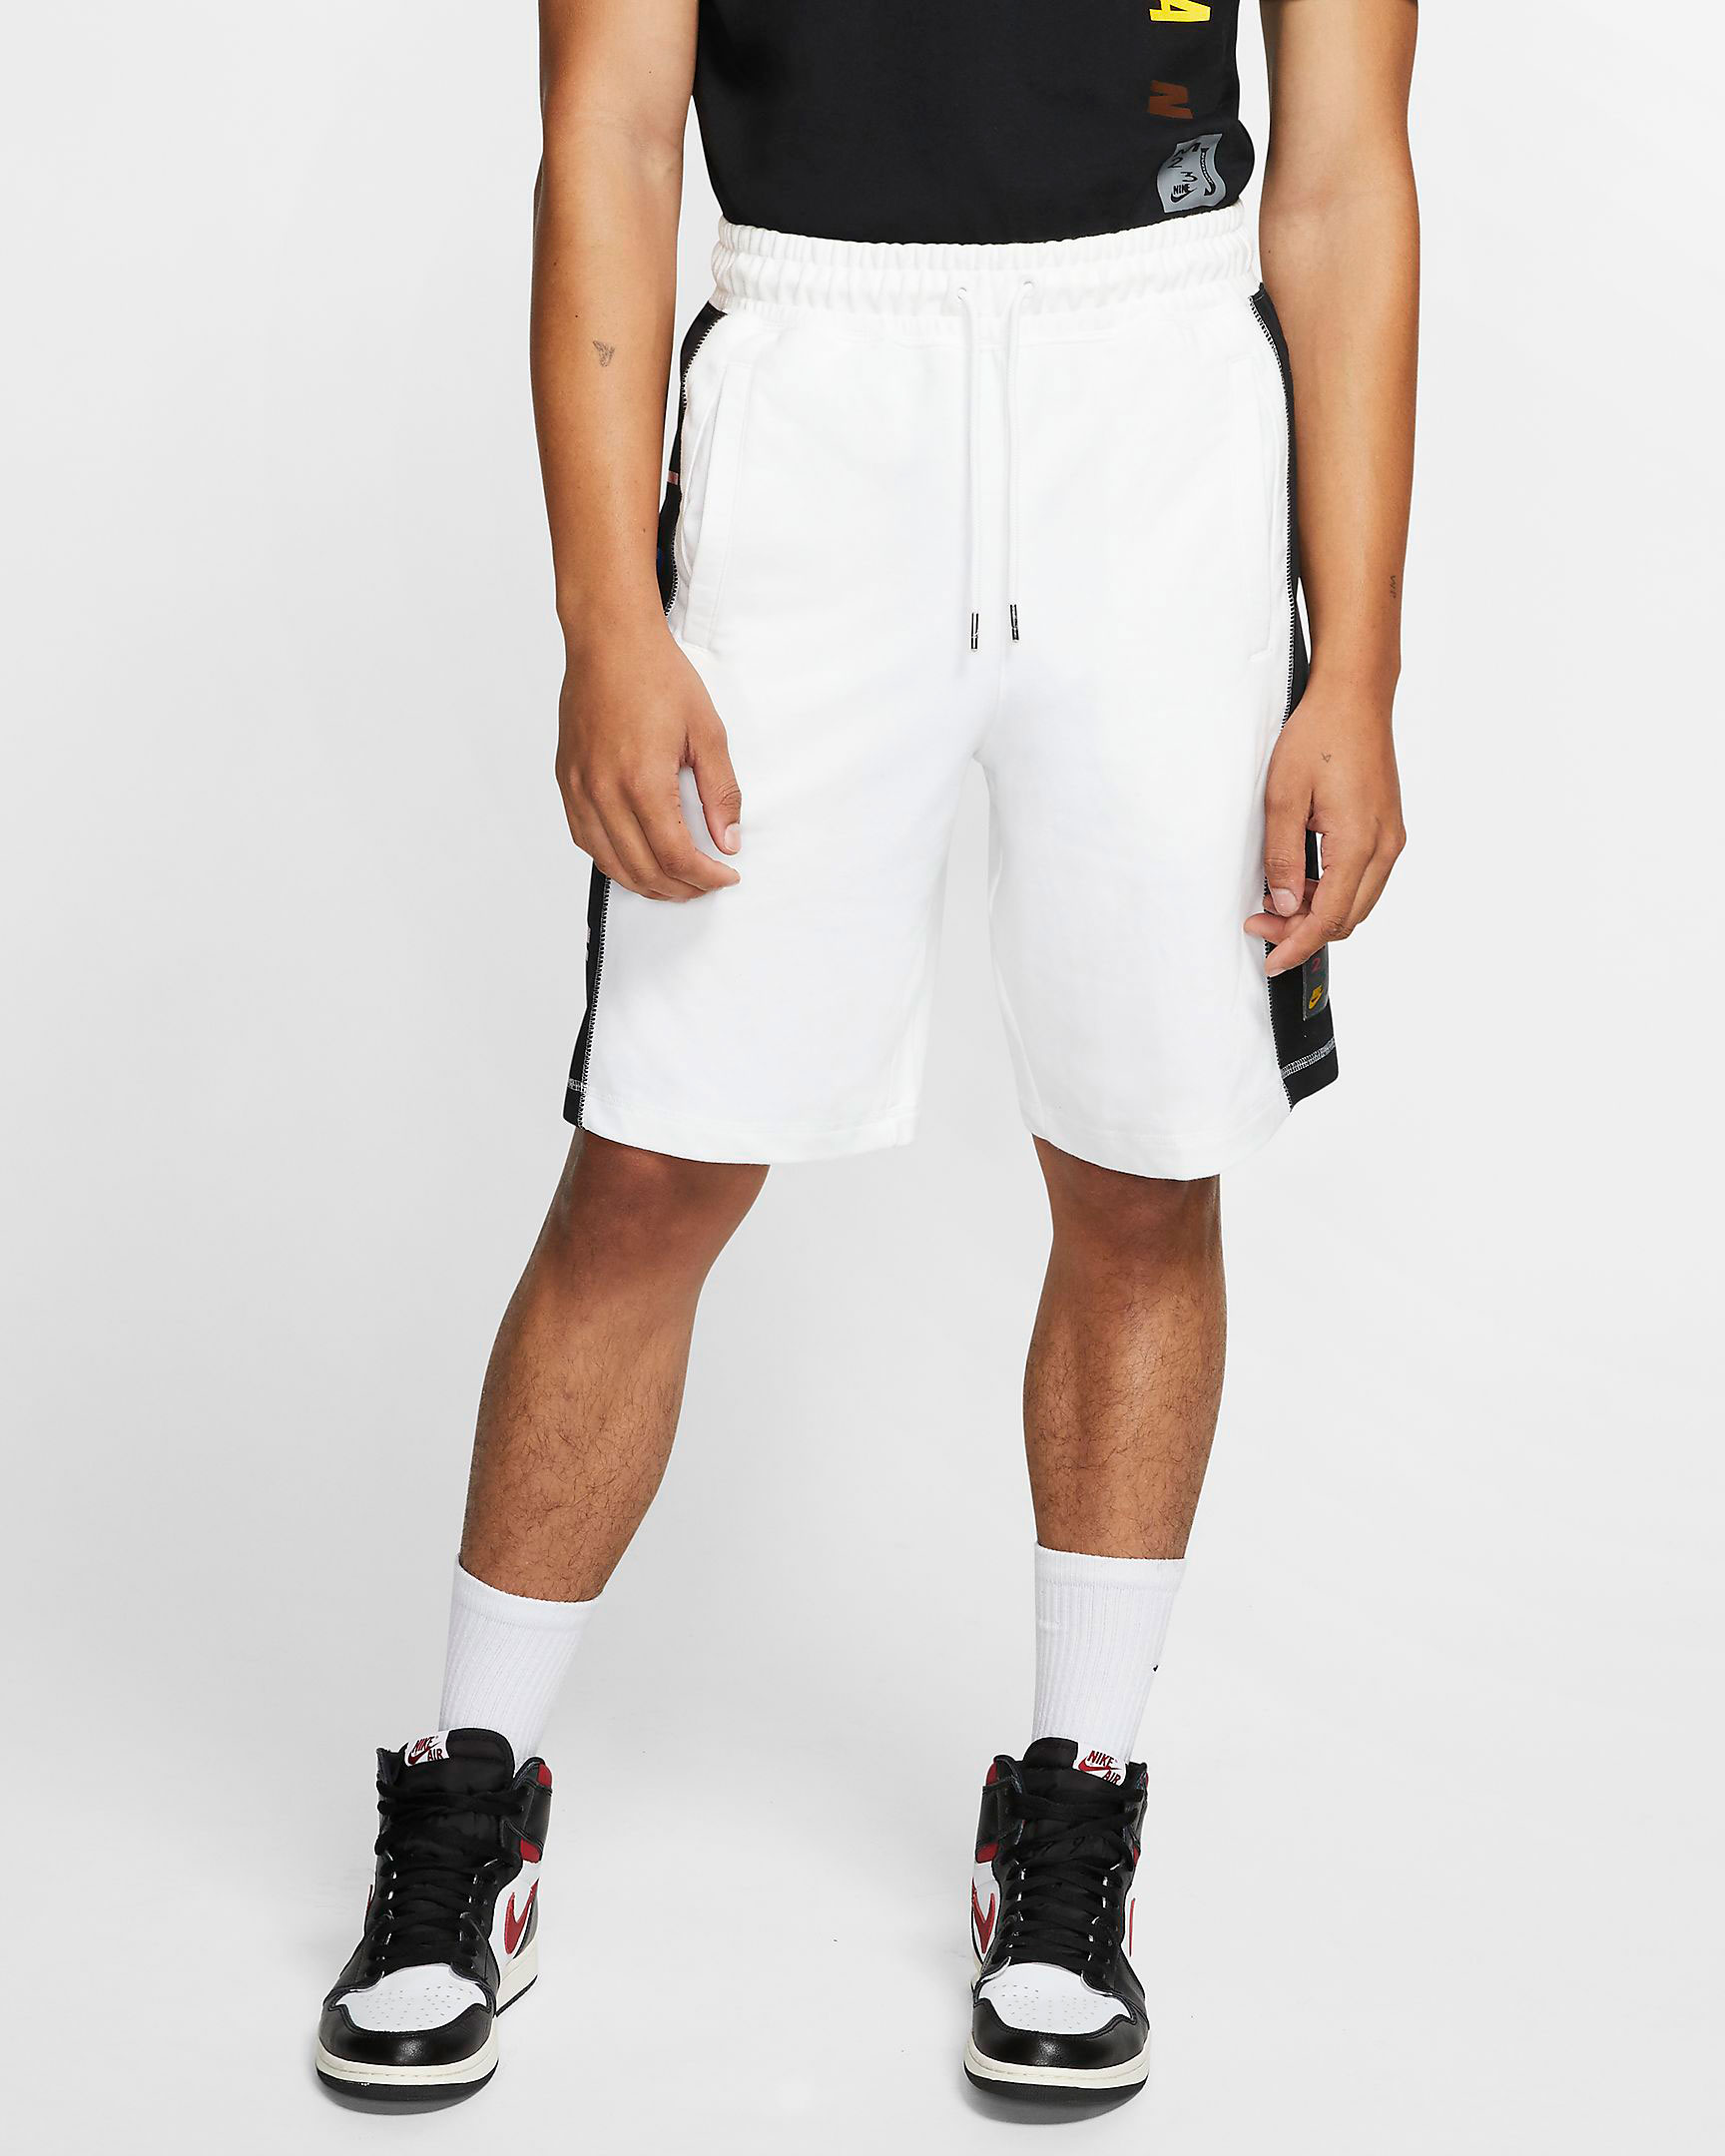 Air Jordan 4 Black Cat Outfits to Match | SneakerFits.com